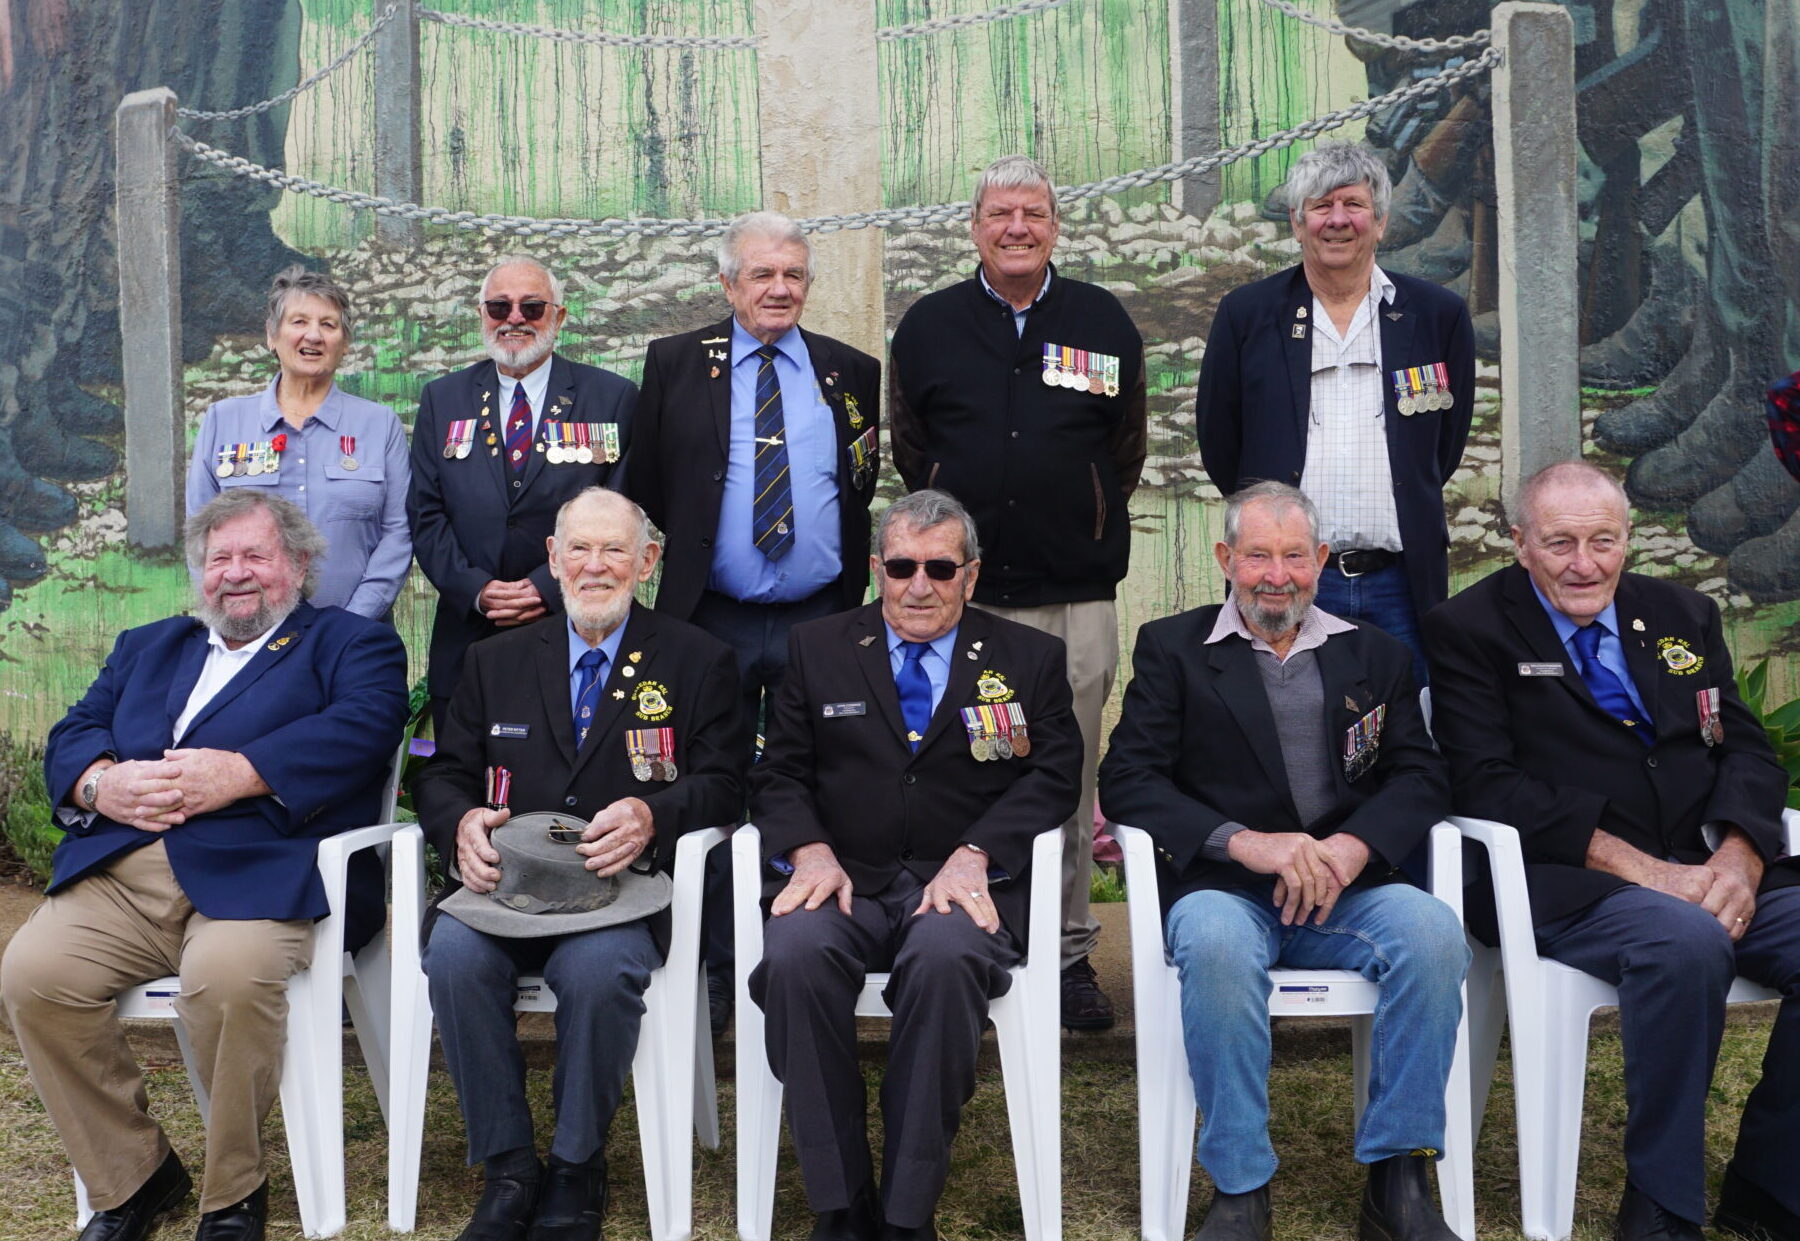 Gunnedah pays tribute to Vietnam veterans 50 years after the war